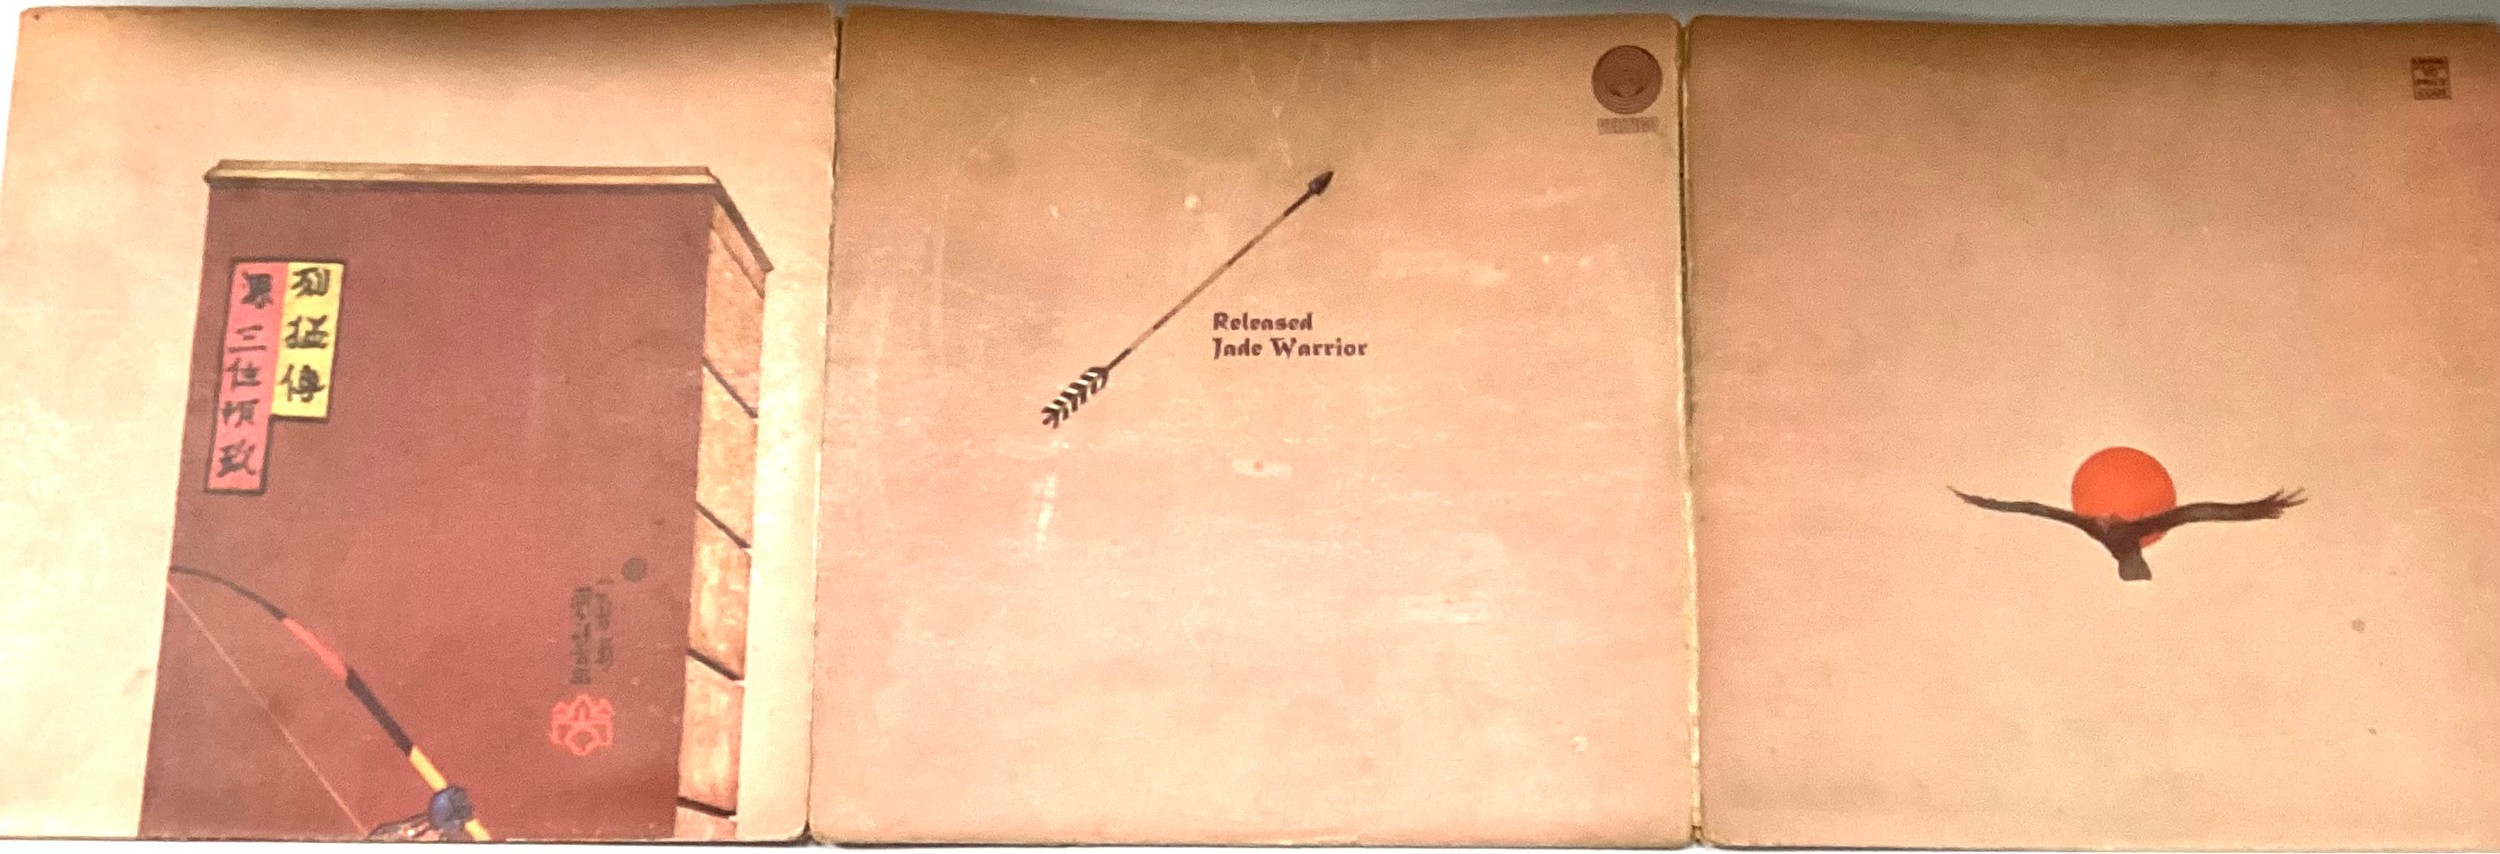 JADE WARRIOR VINYL VERTIGO SWIRL ALBUM ‘RELEASED’. This Ex condition album is from 1971 and on the - Bild 2 aus 9